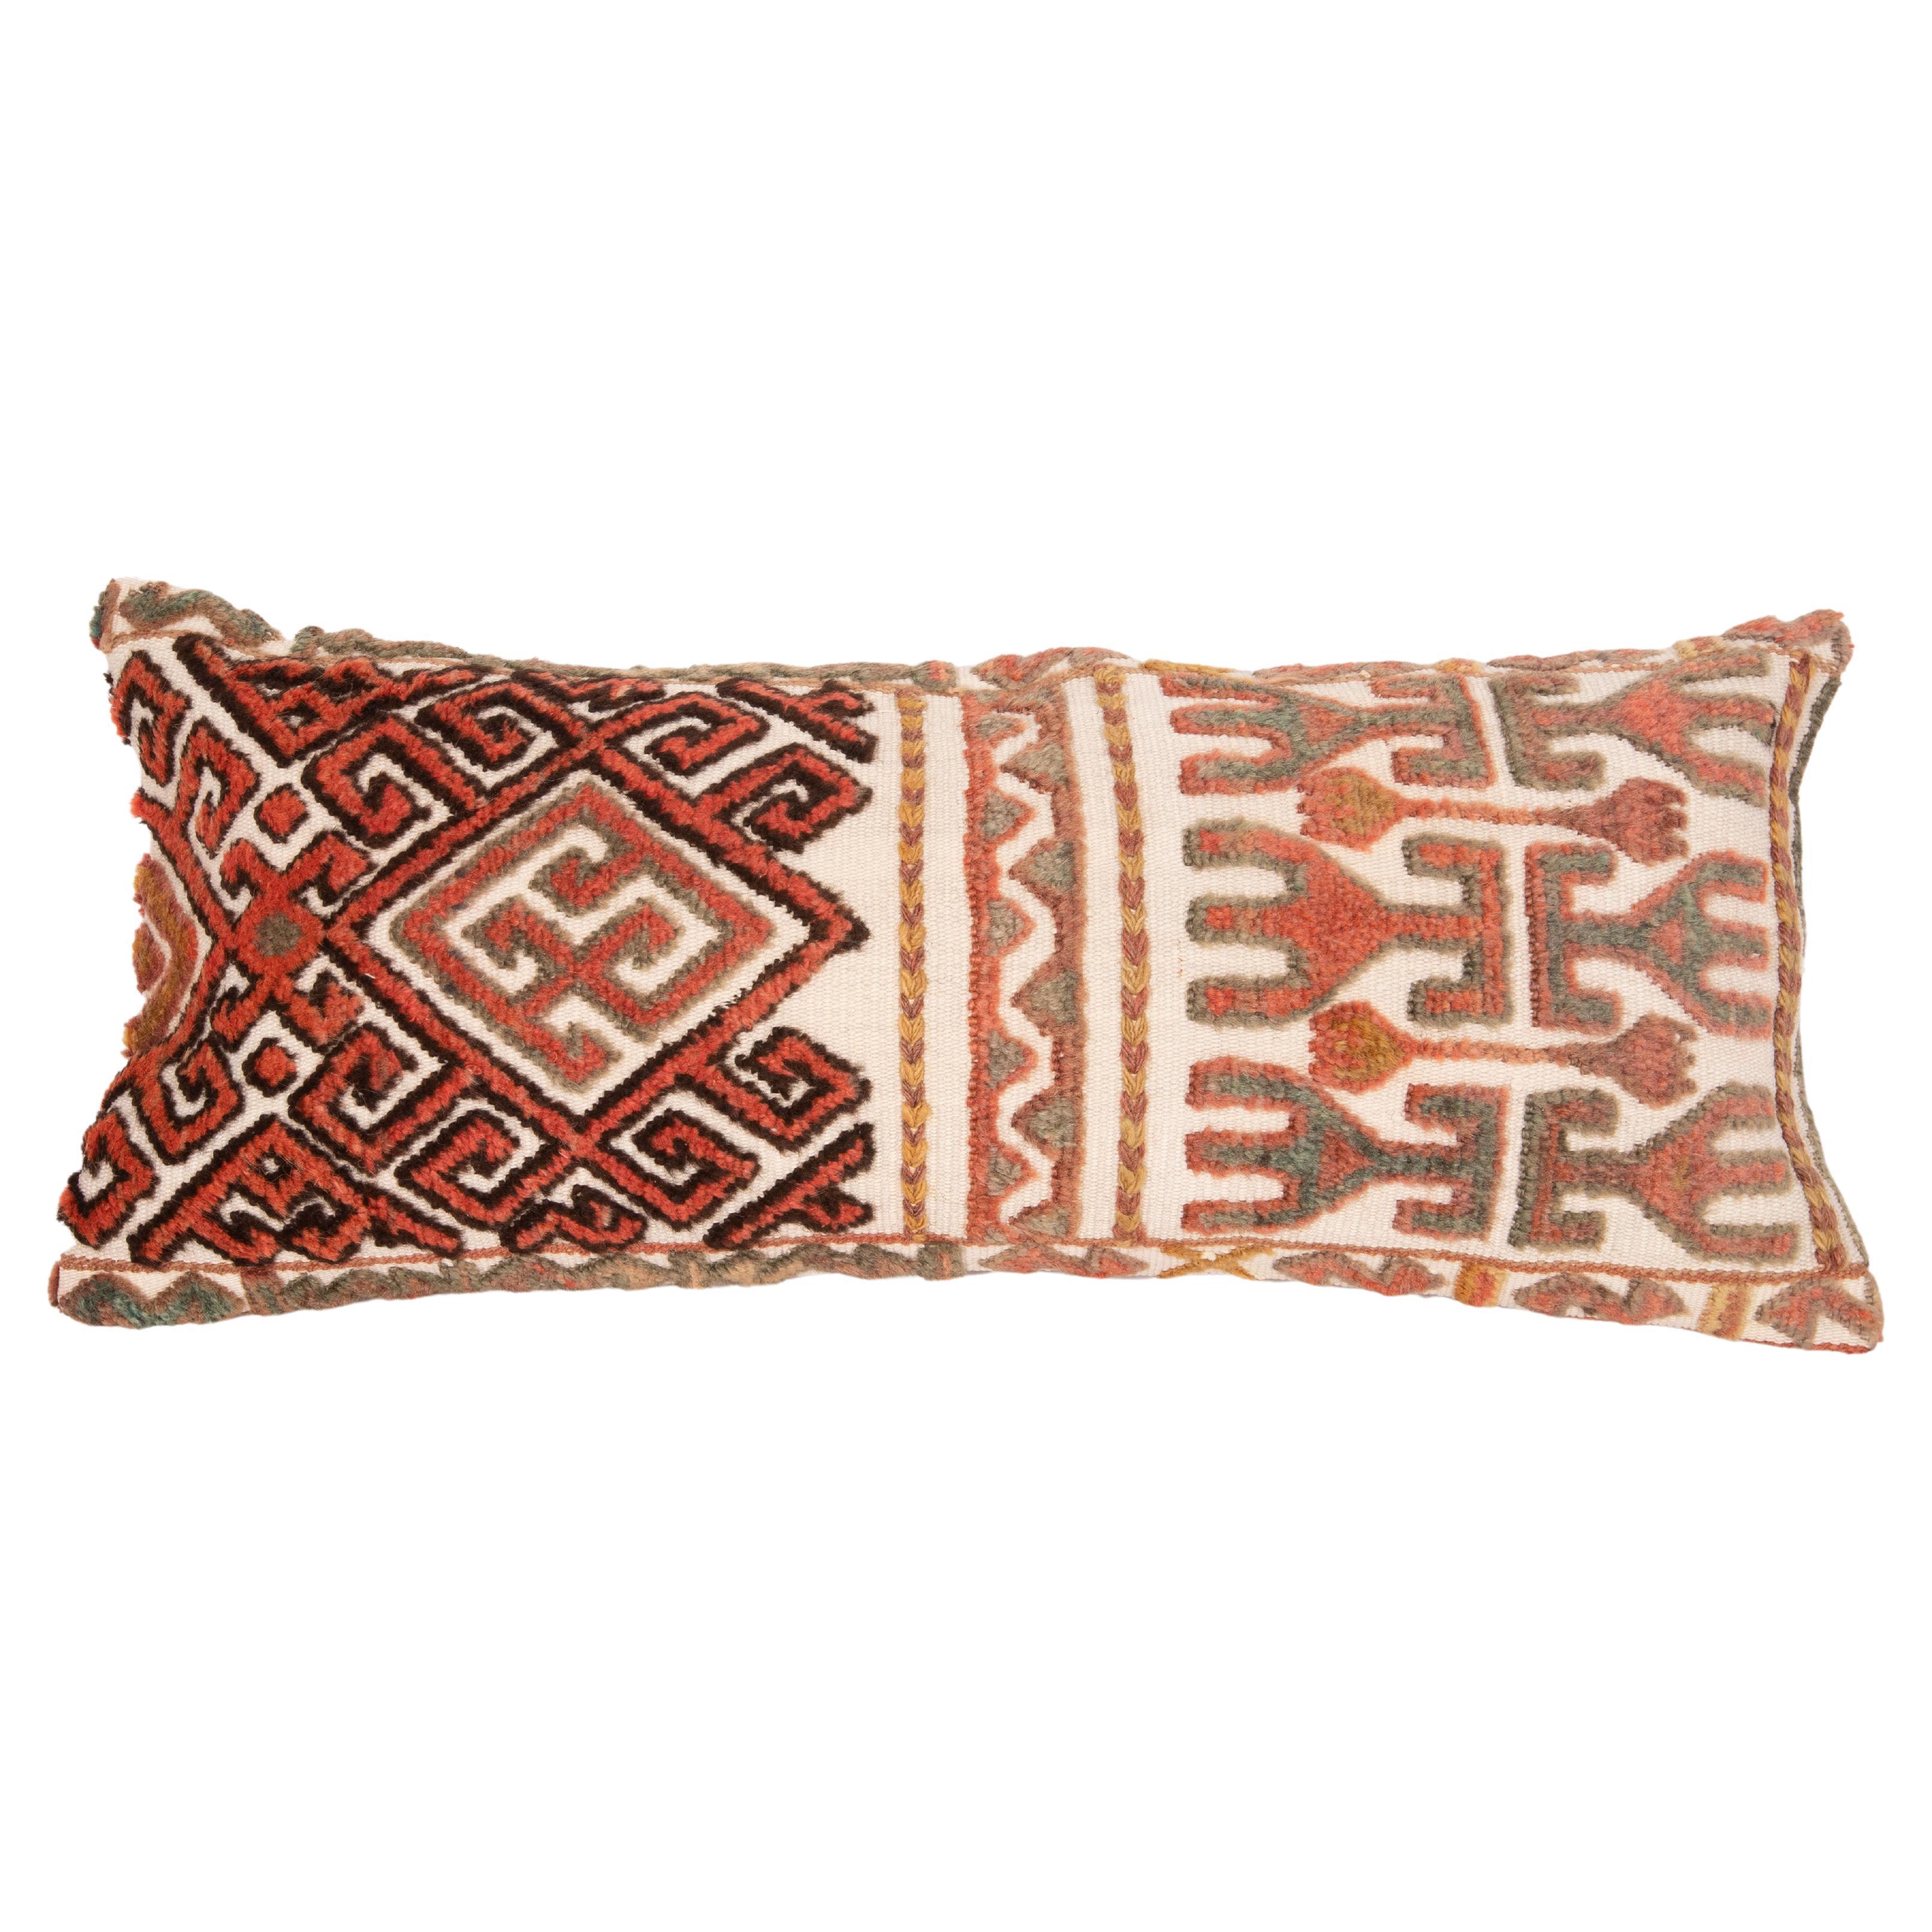 Pillow Cover Made from an Early 20th C. Karakalpak Tent Band, Uzbekistan For Sale